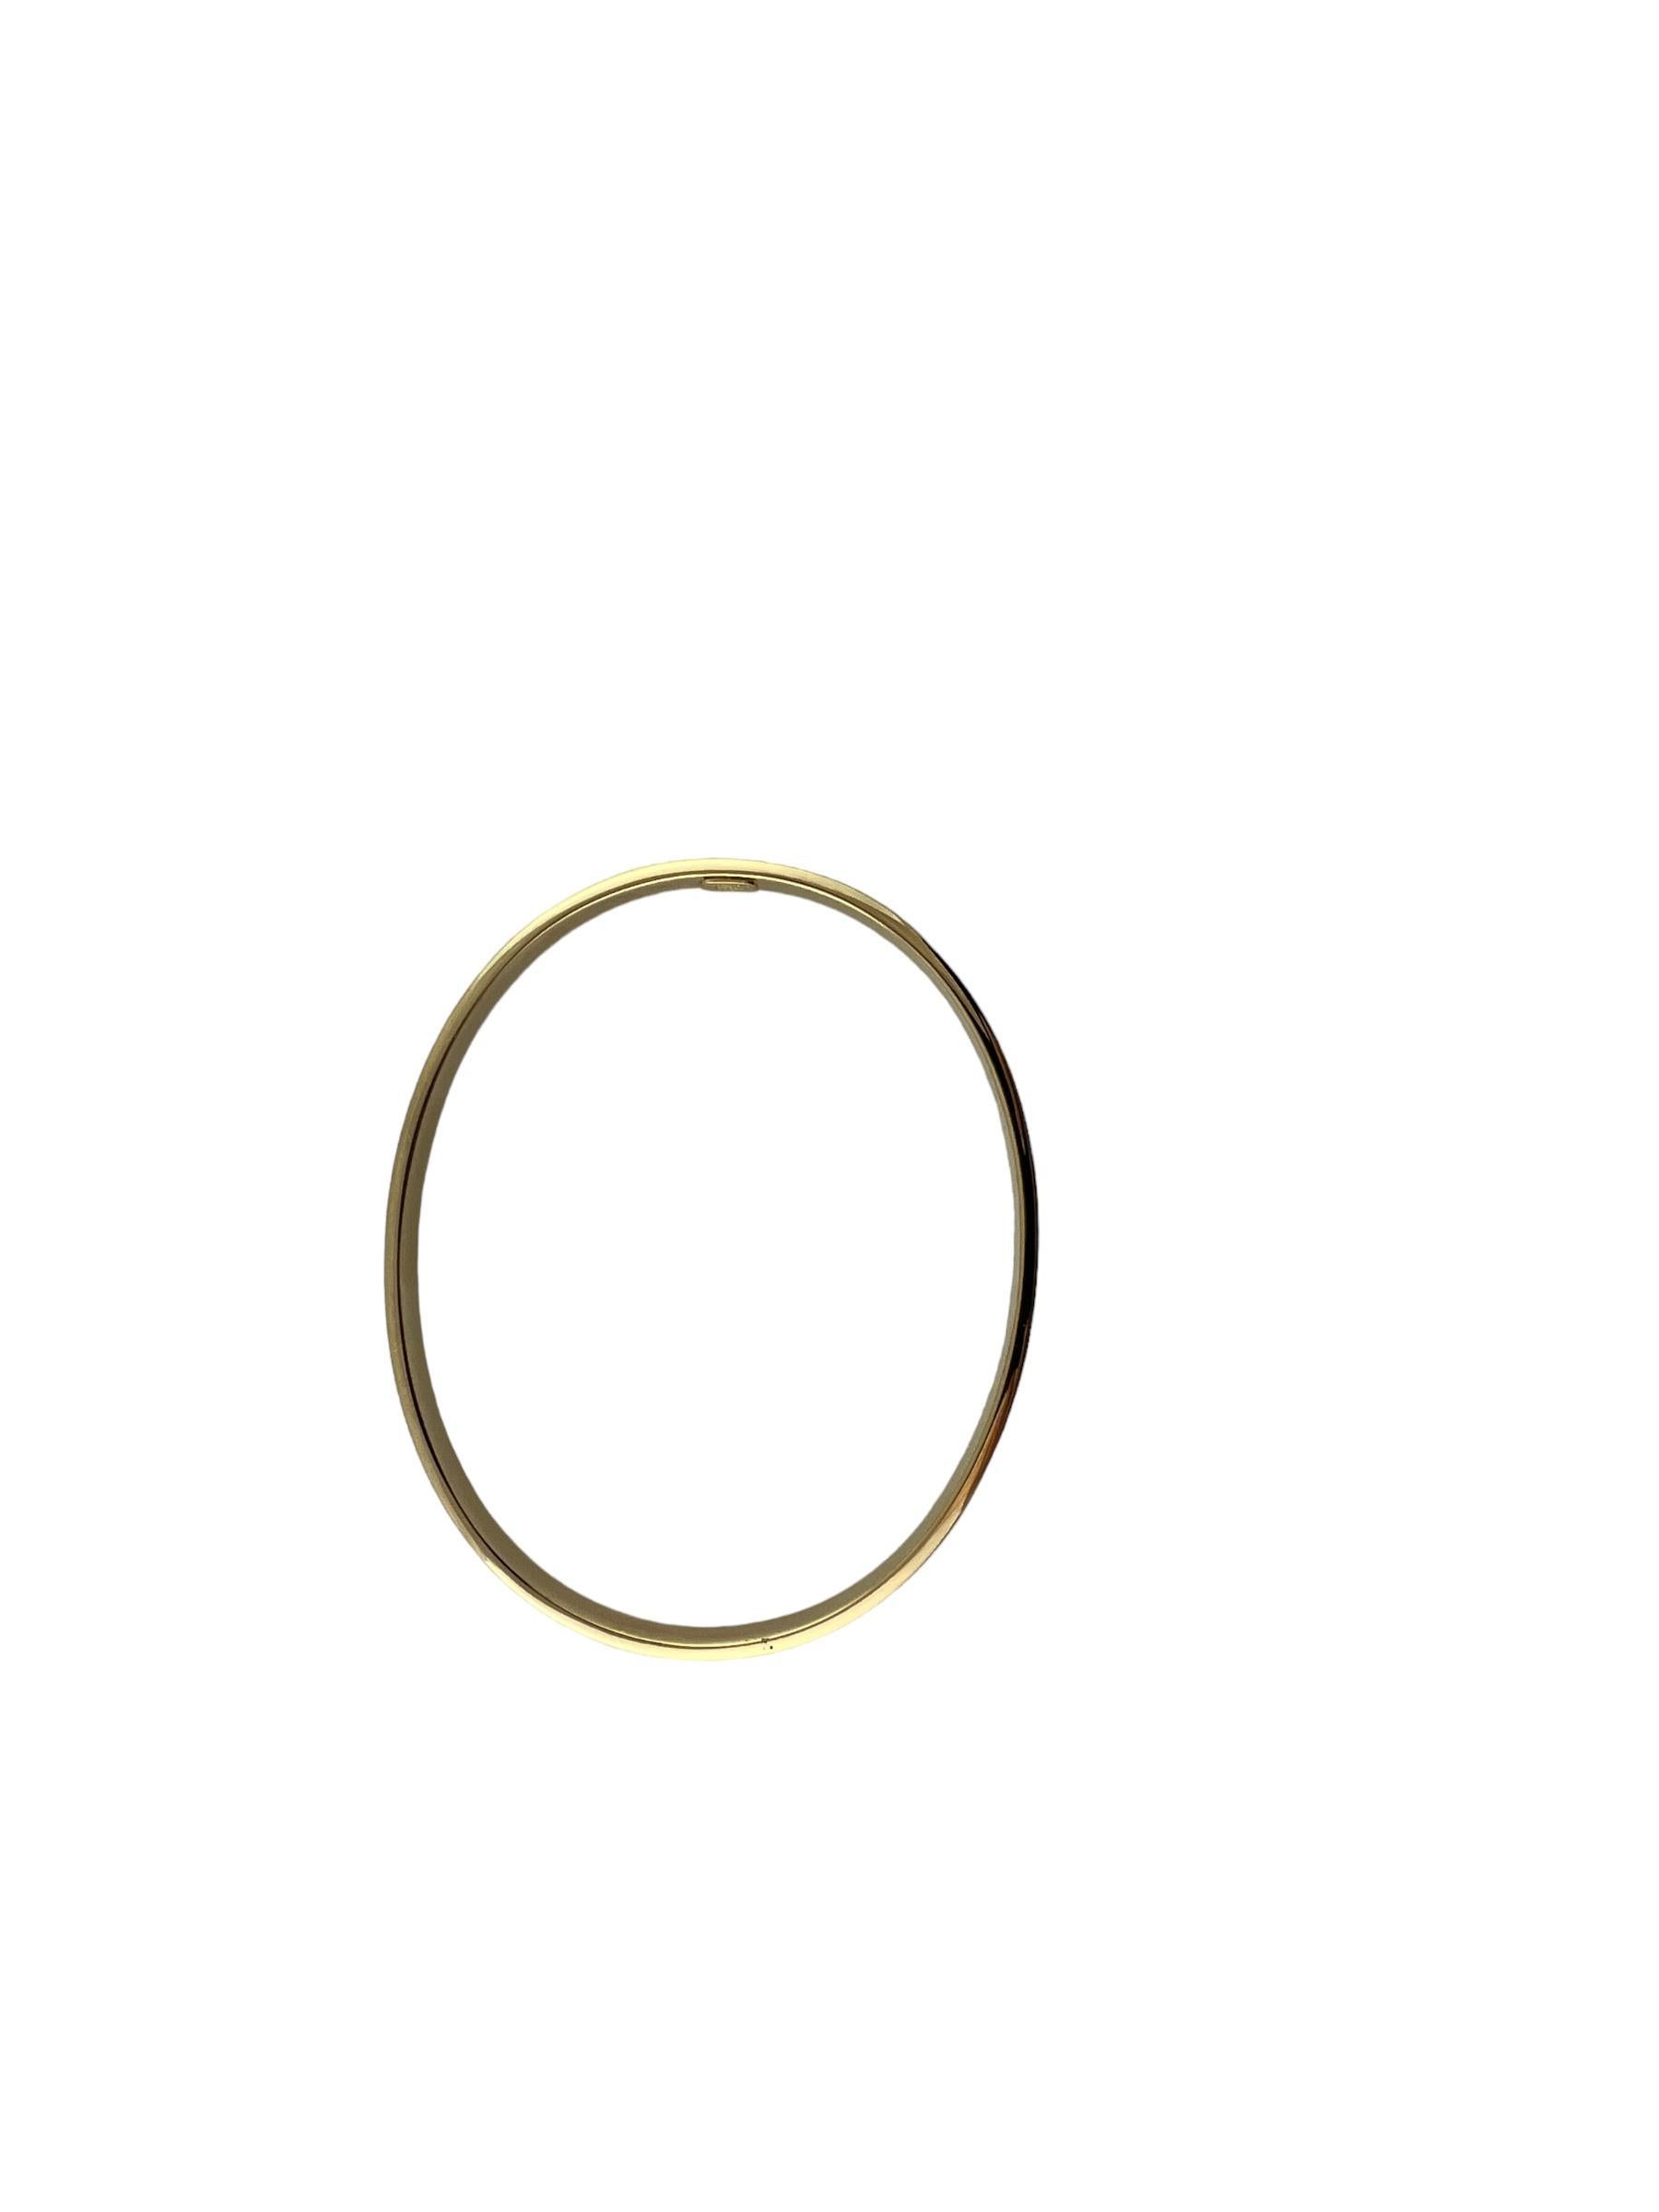 Tiffany & Co. 18K Yellow Gold Oval Bangle Bracelet #15735 2